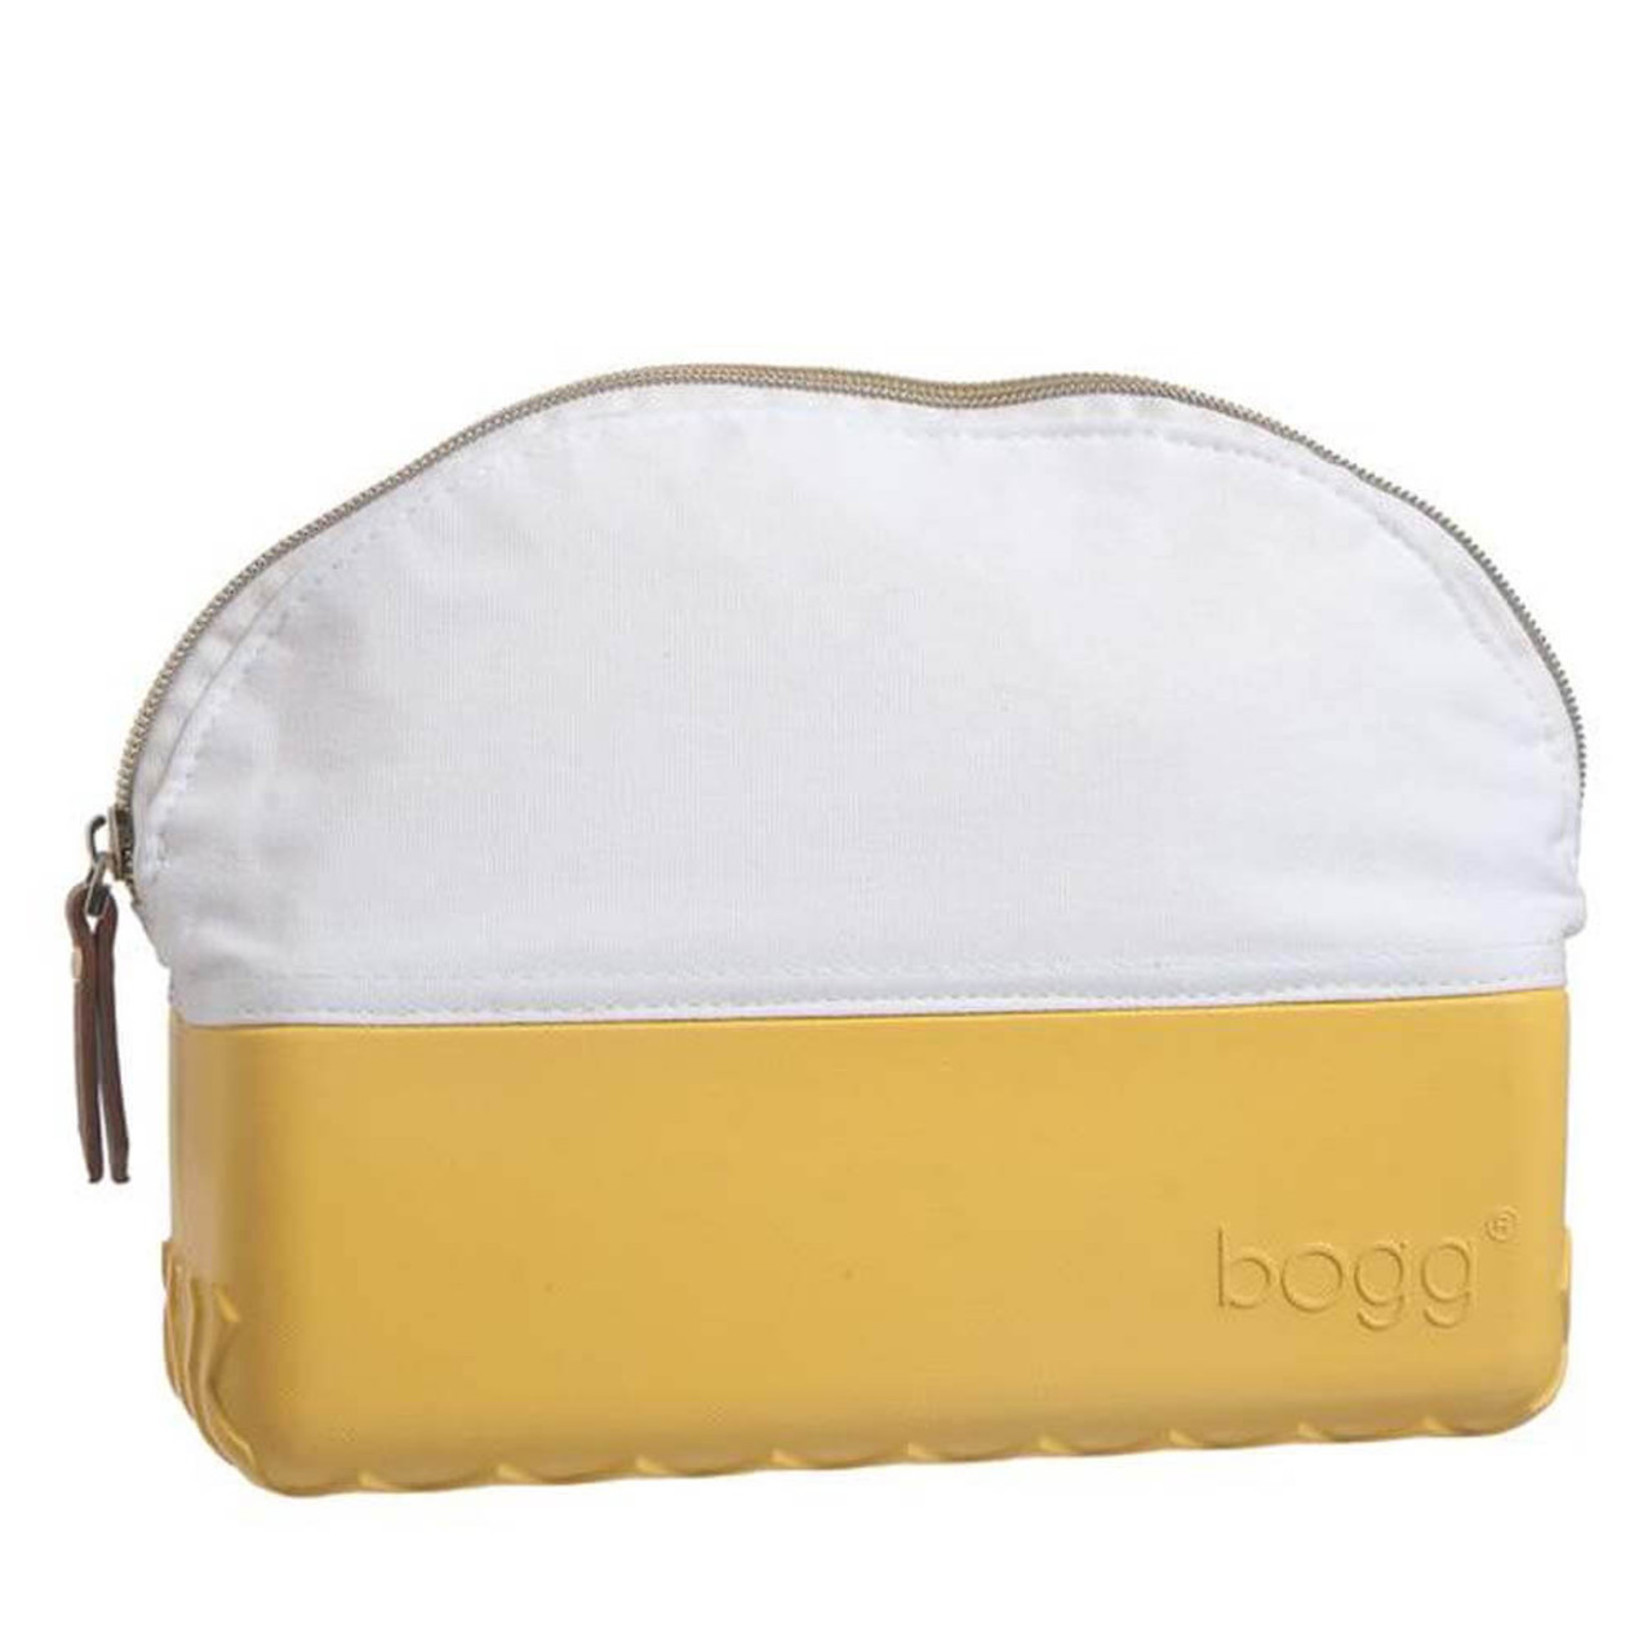 Bogg Bag Beauty and the  Bogg-Yellow